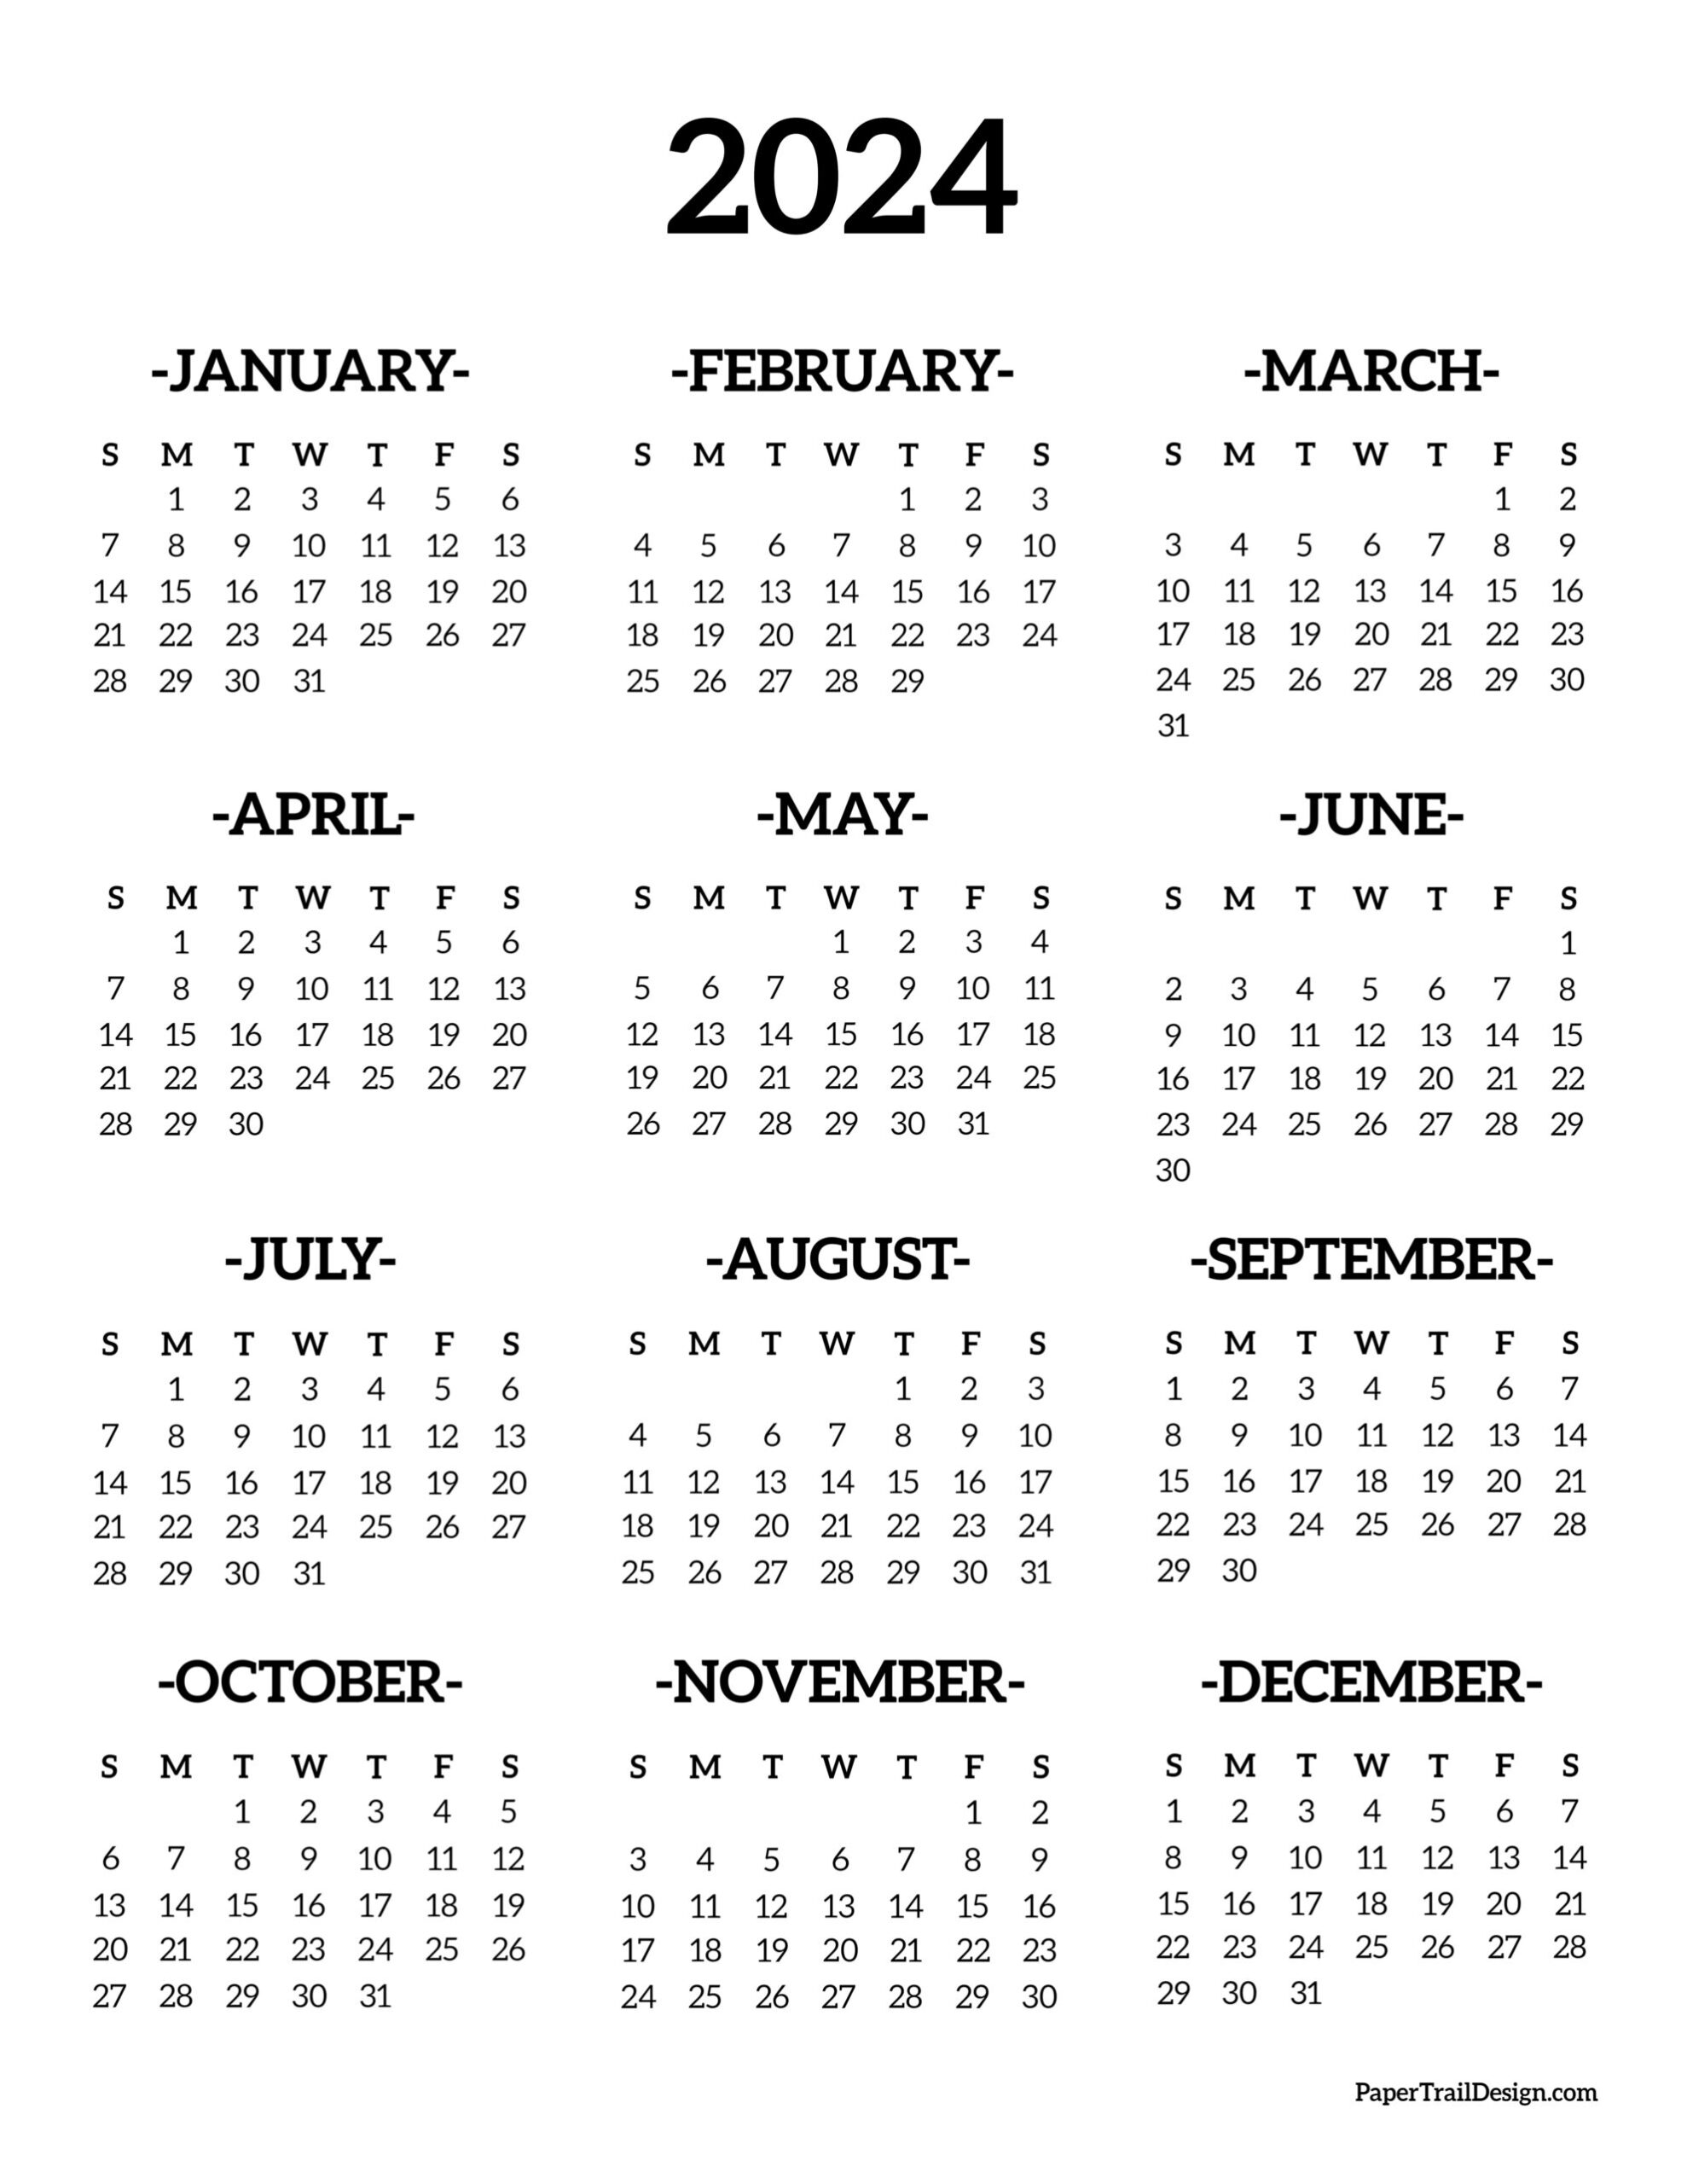 Calendar 2024 Printable One Page - Paper Trail Design for 2024 Free Printable Calendar